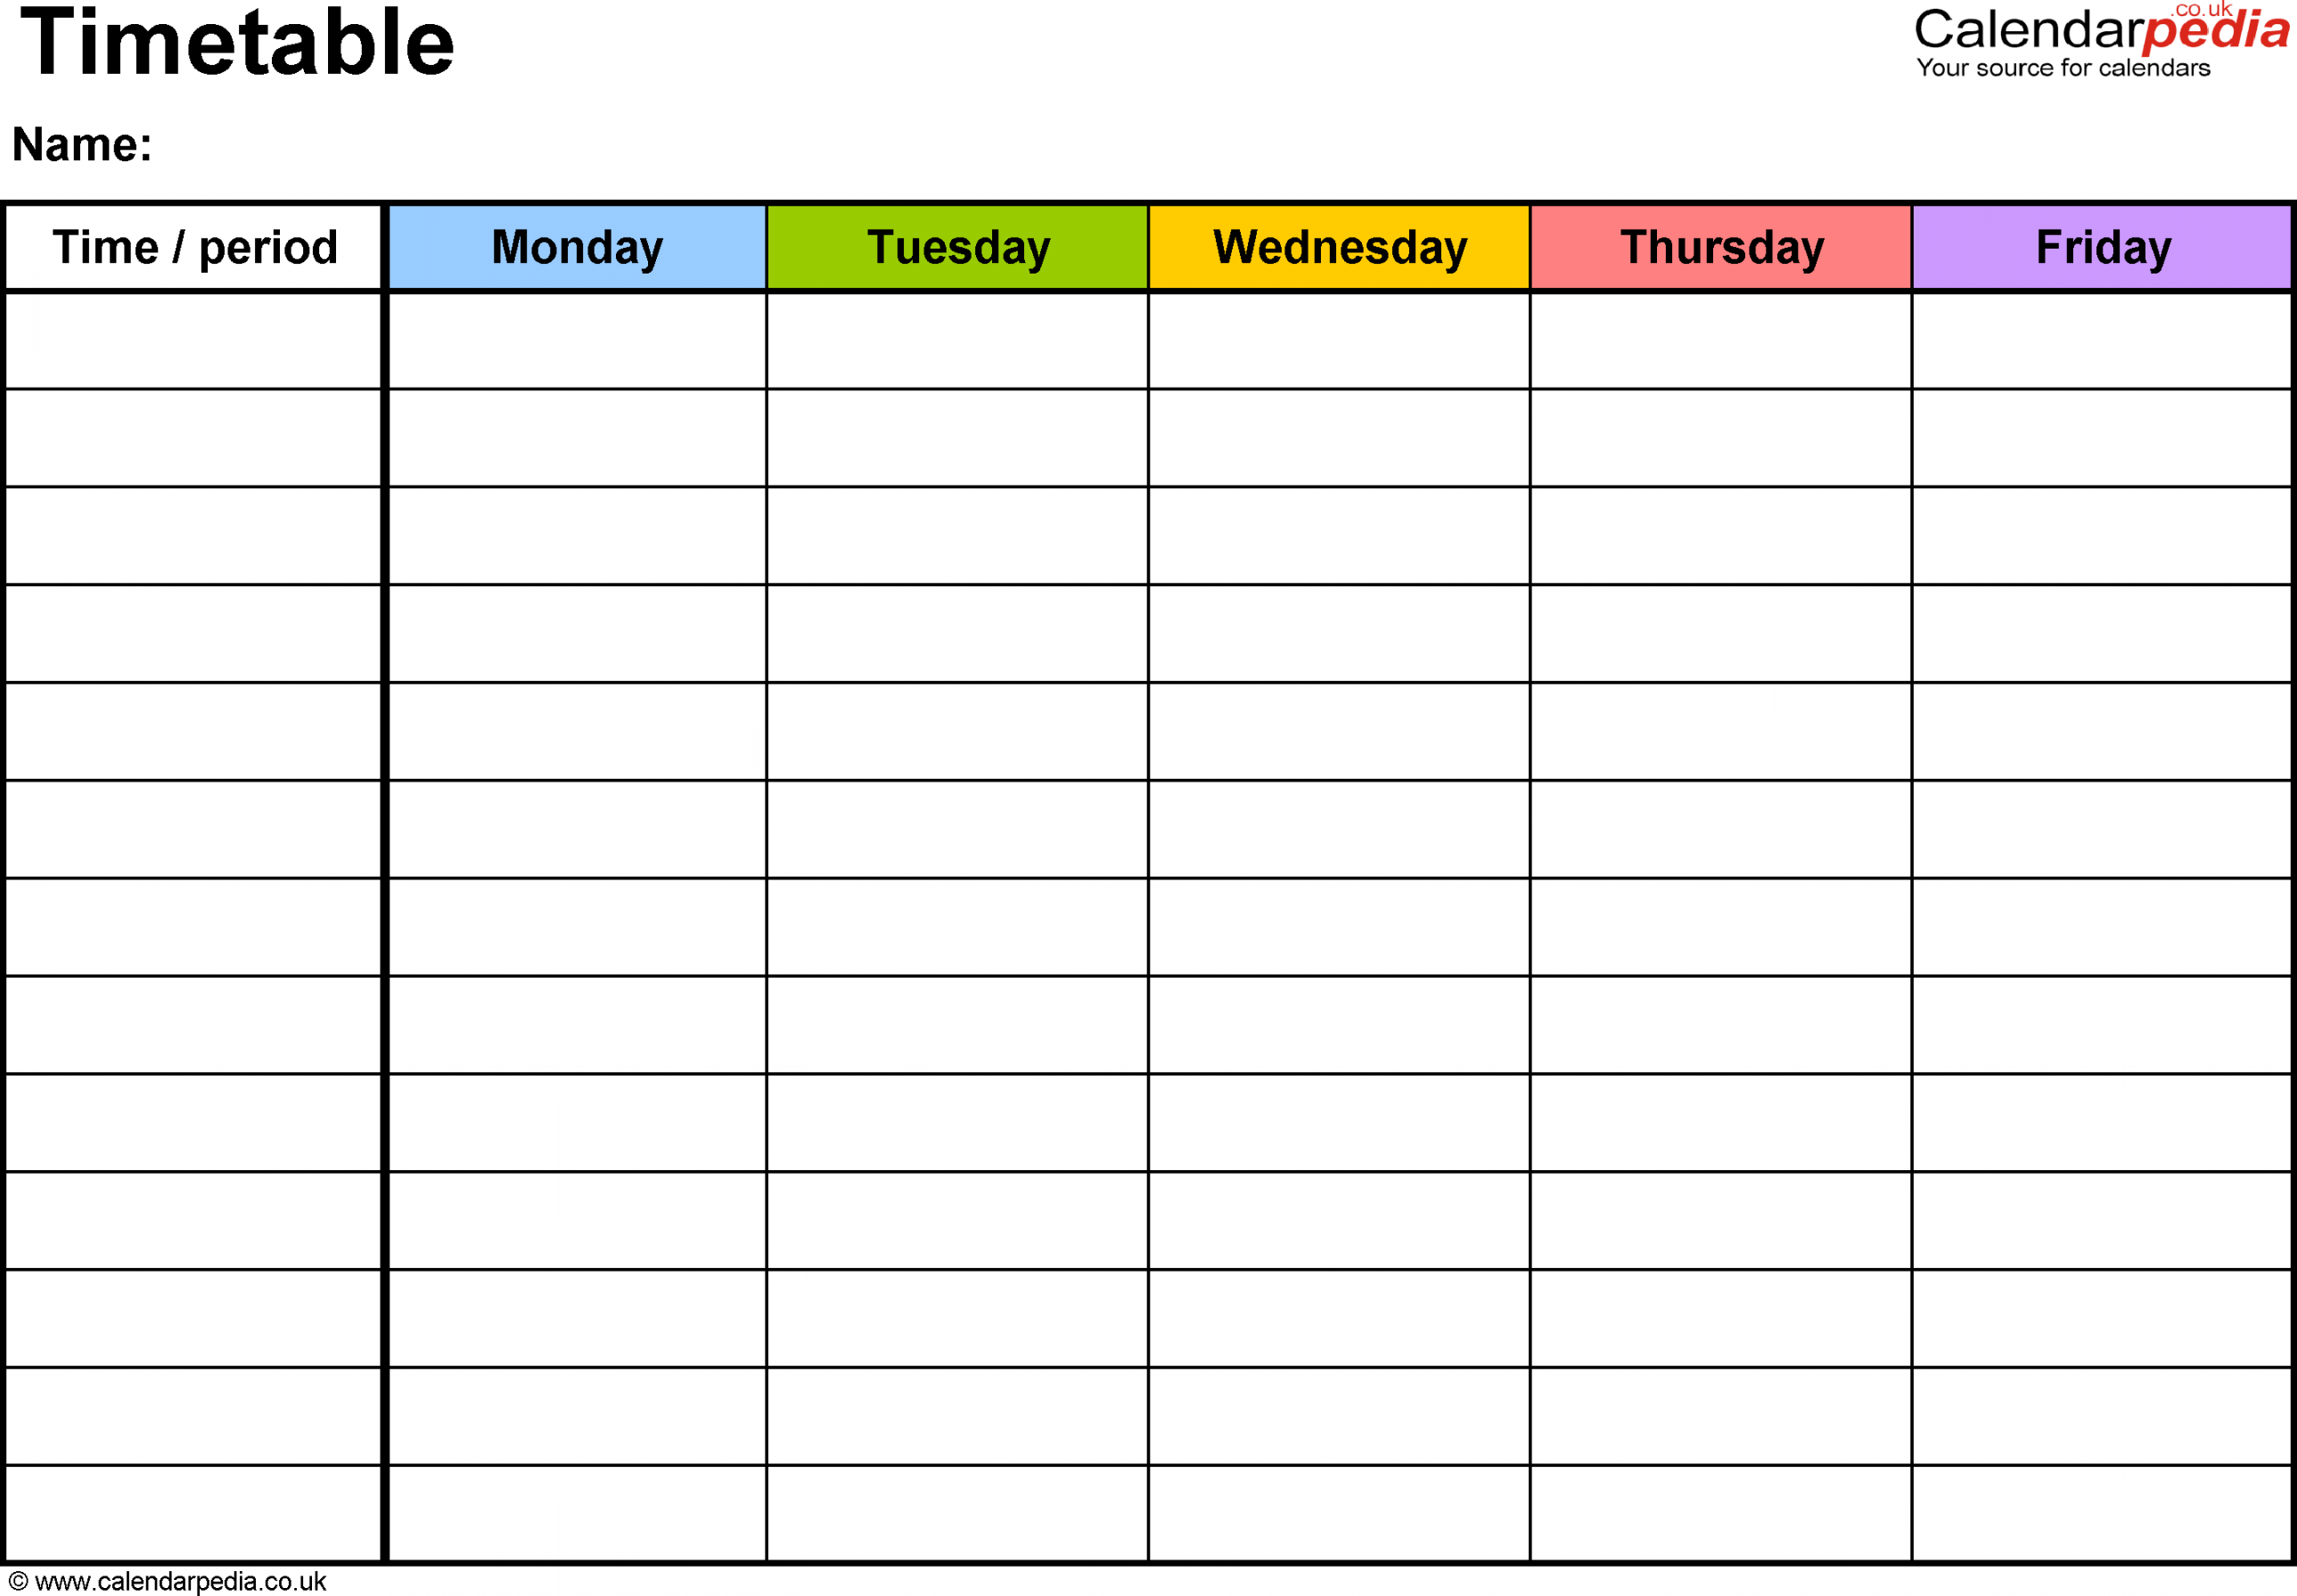 Timetable templates for Microsoft Word - free and printable